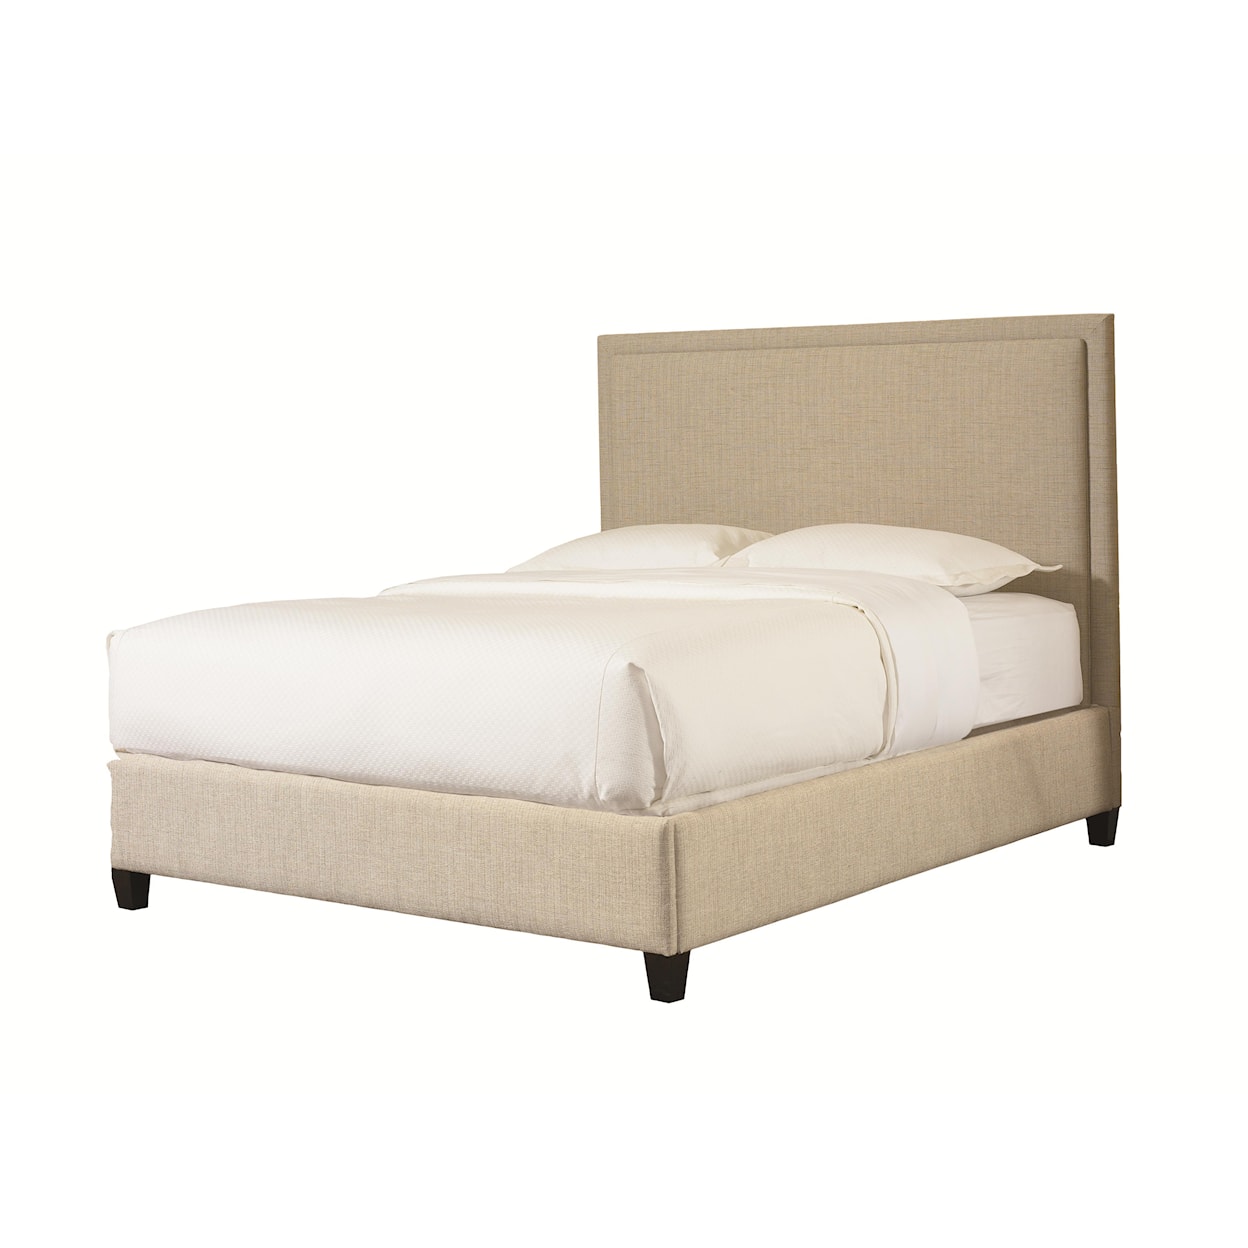 Bassett Custom Upholstered Beds Queen Manhattan Upholstered Bed w/ Low FB